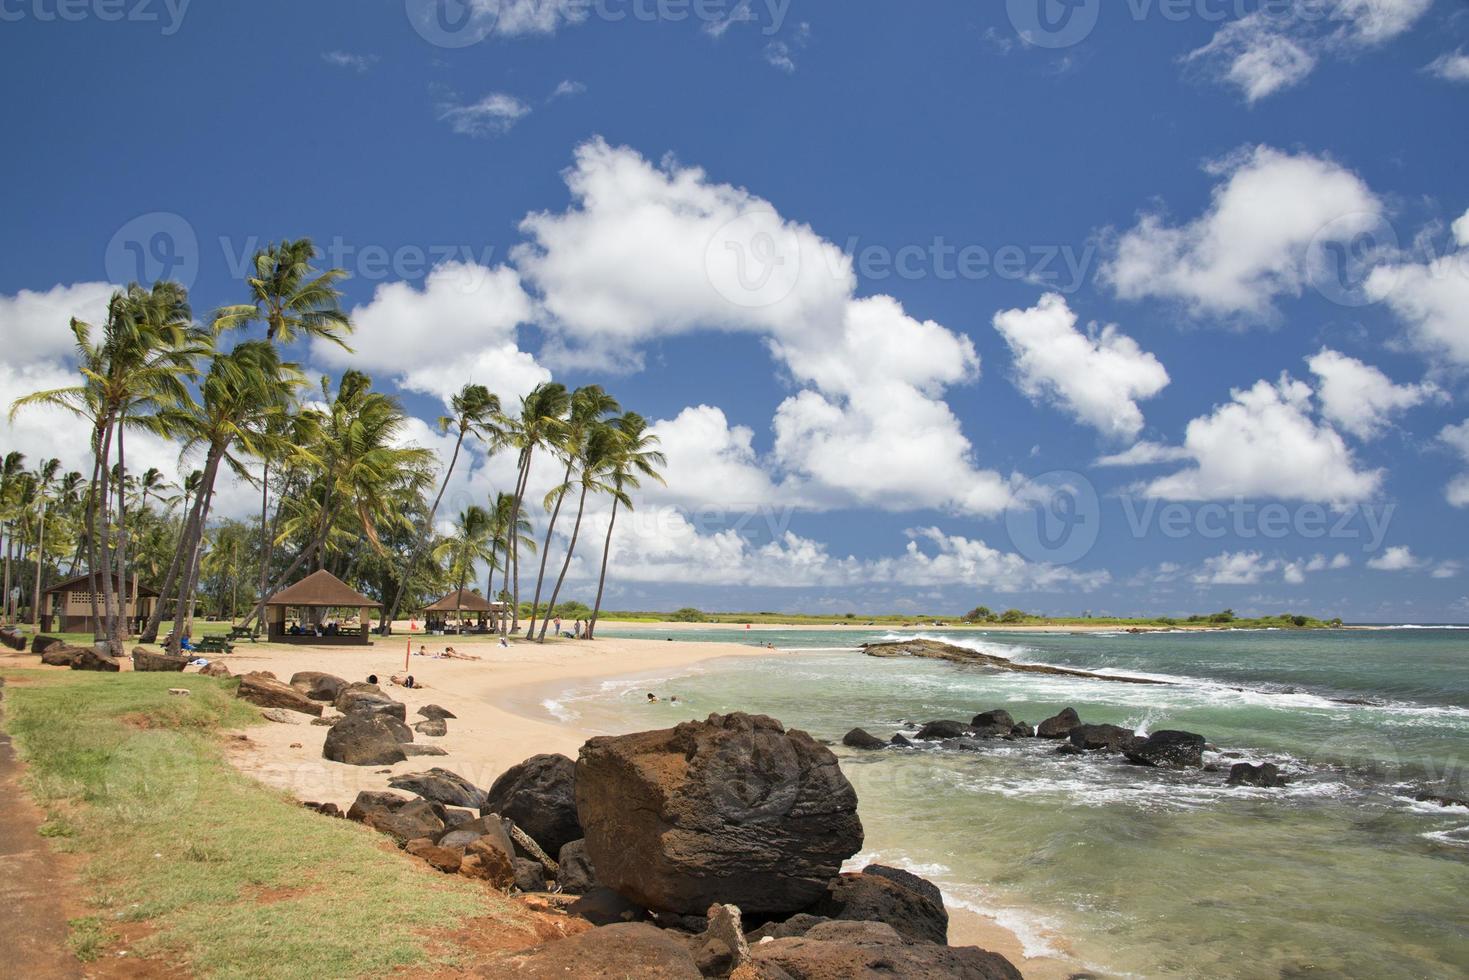 hawaii poipu strand landskap foto